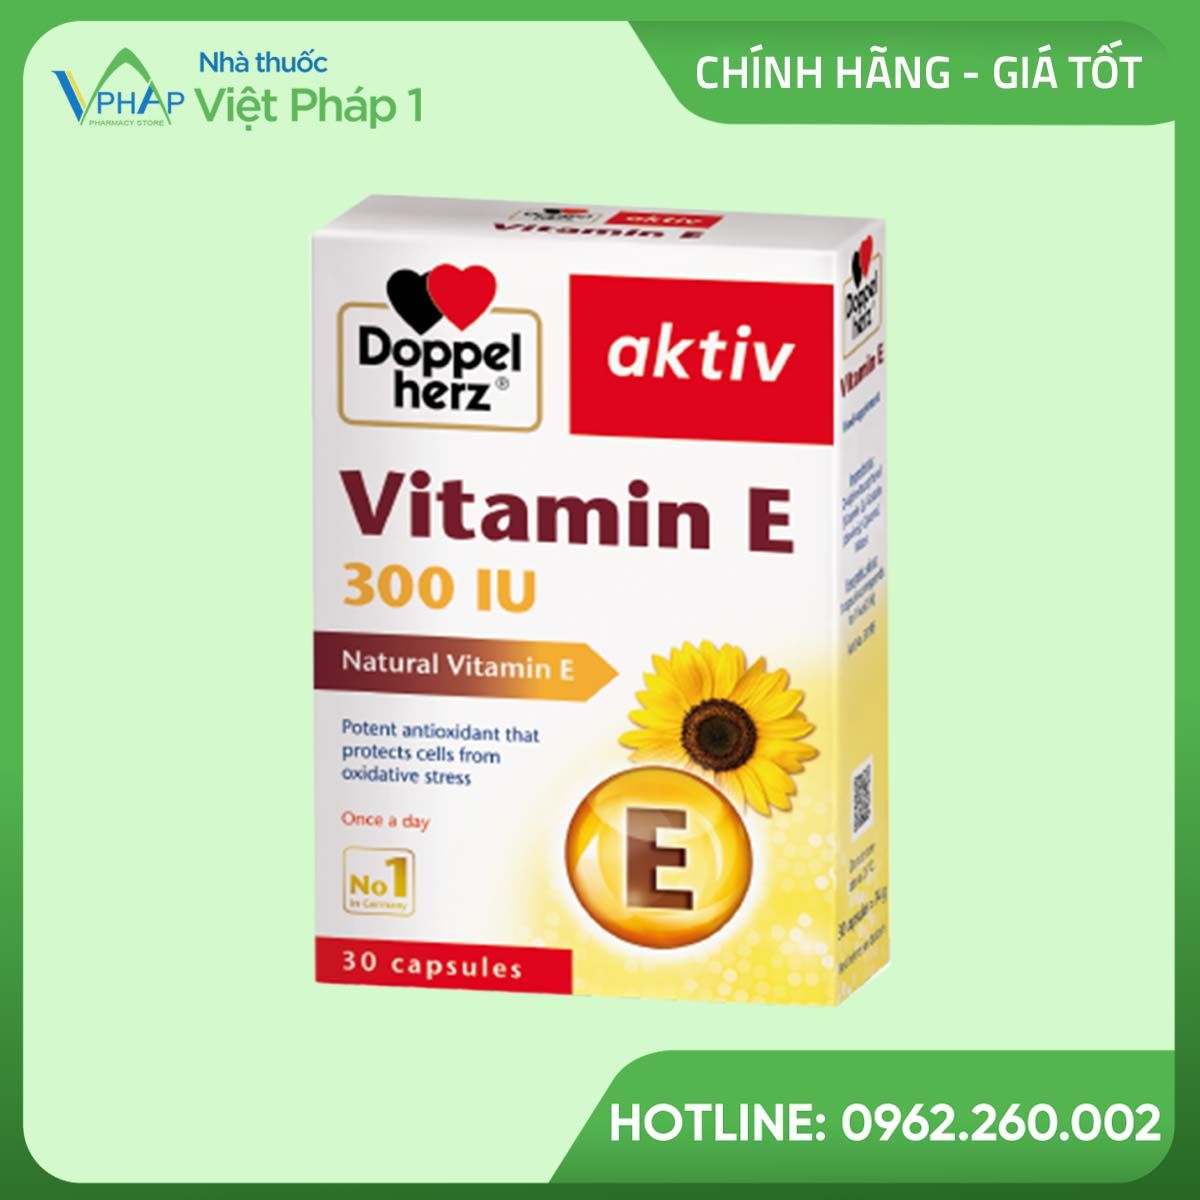 Doppelherz Aktiv Vitamin E bổ sung vitamin E cho cơ thể